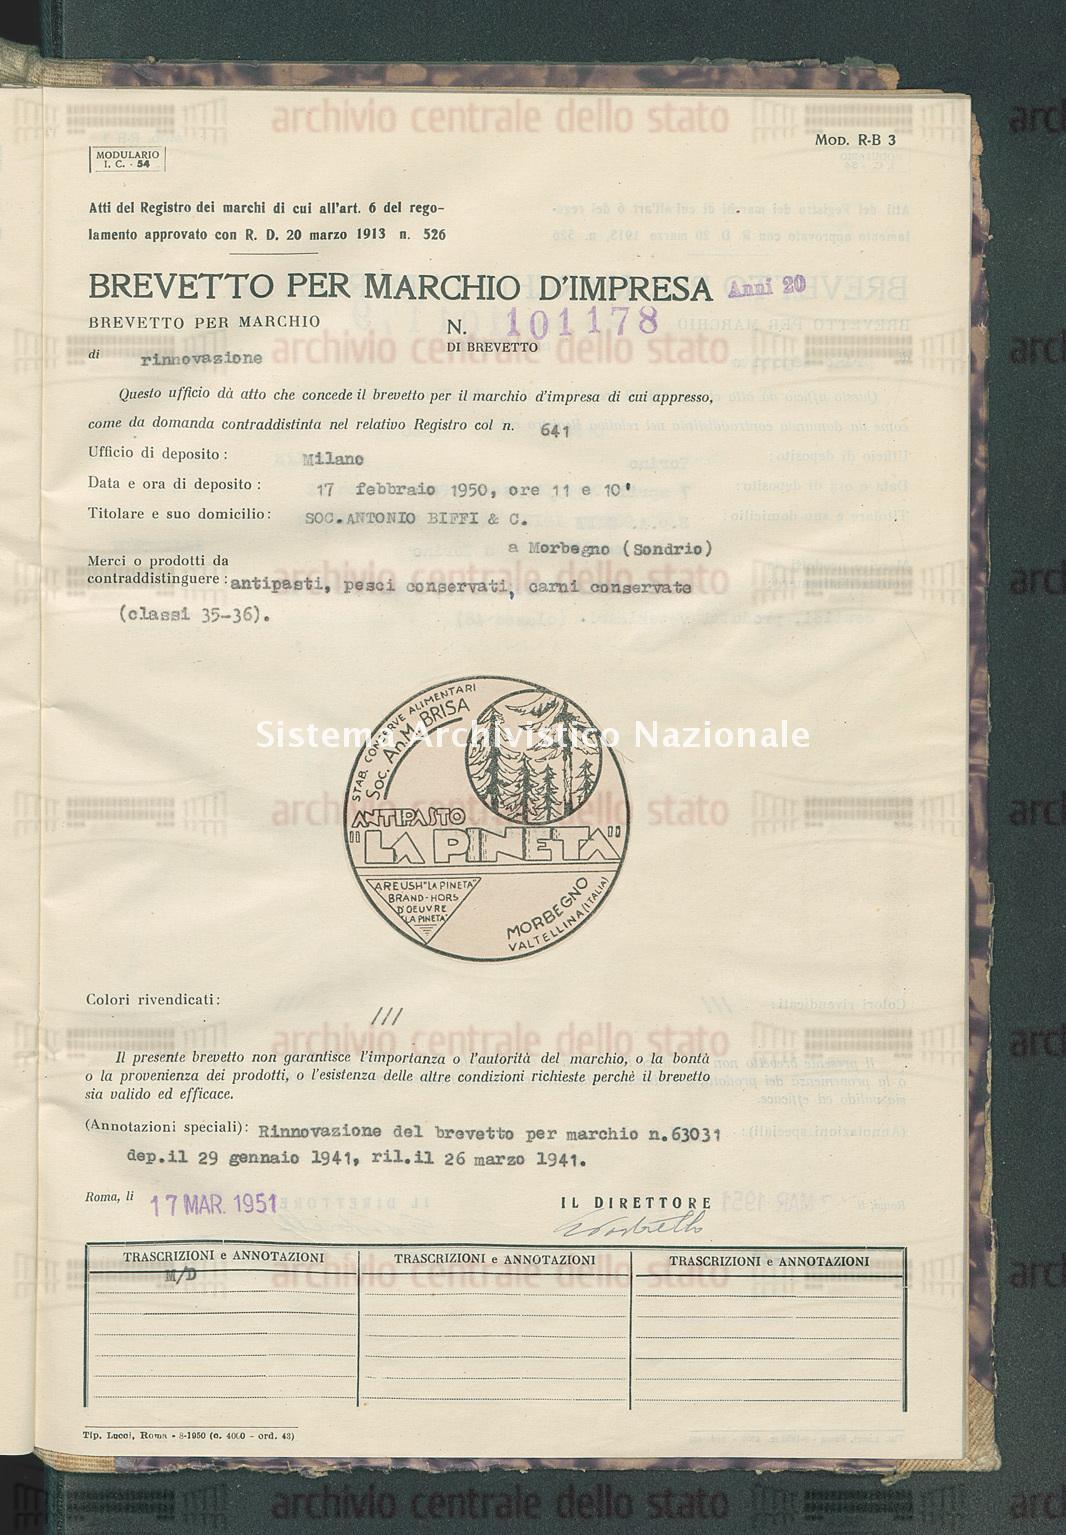 Antipasti, pesci conservati, carni conservate Soc.Antonio Bitti & C. (17/03/1951)